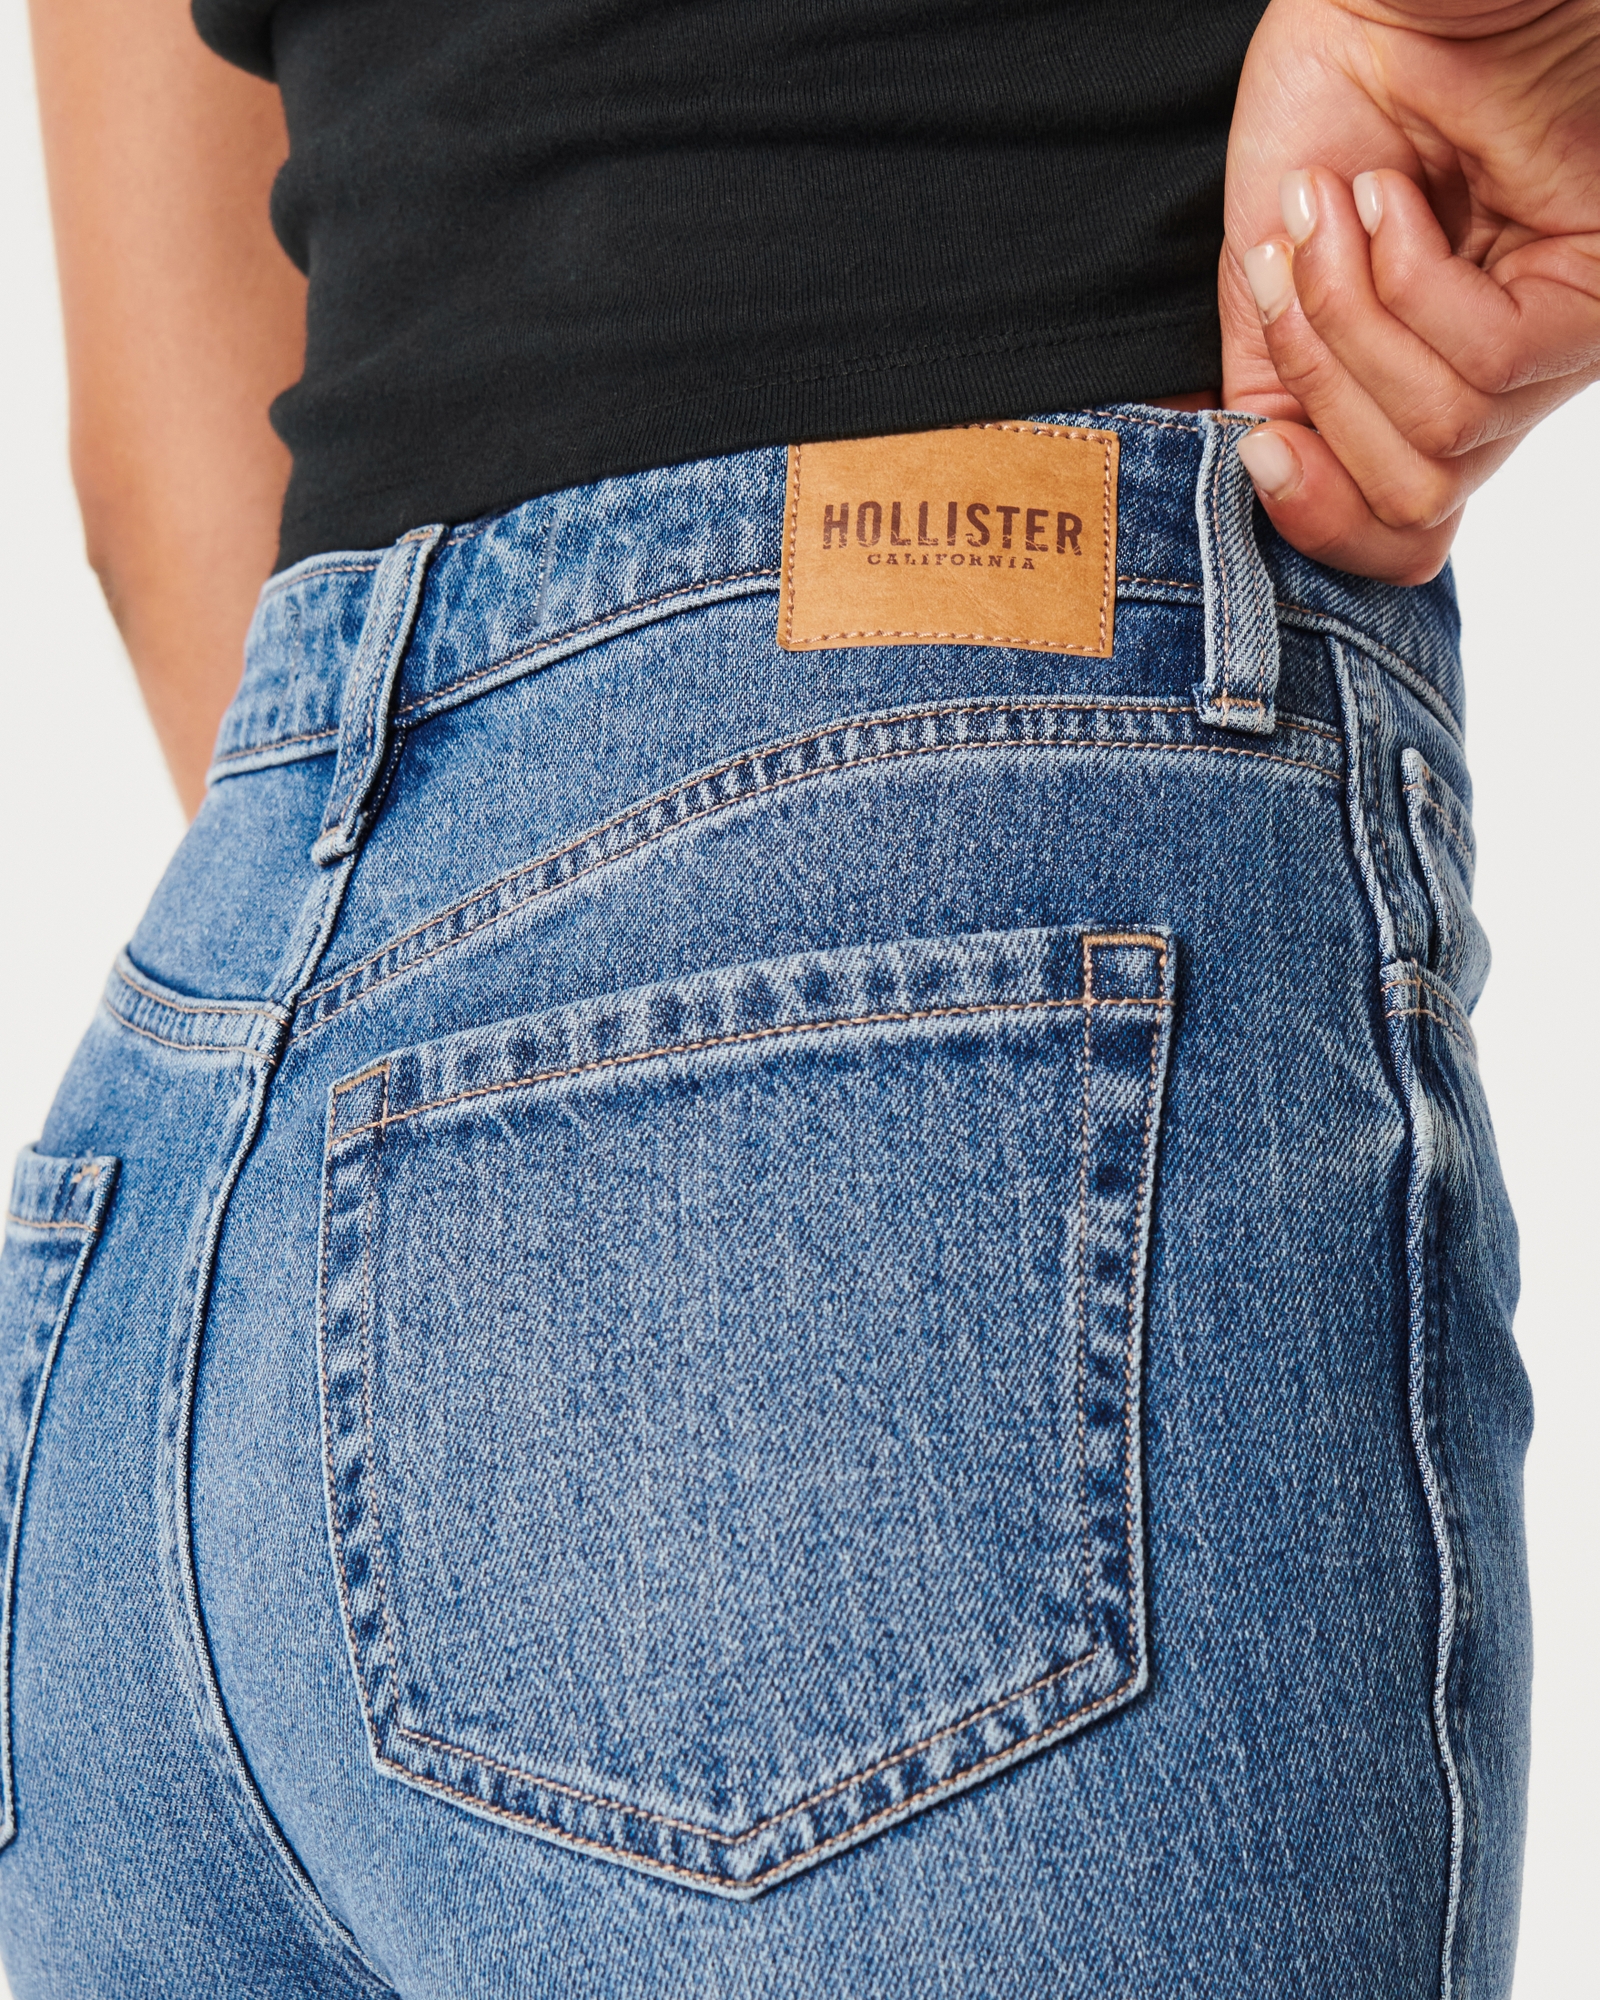 Women's Ultra High-Rise Medium Wash Mom Jeans, Women's Bottoms